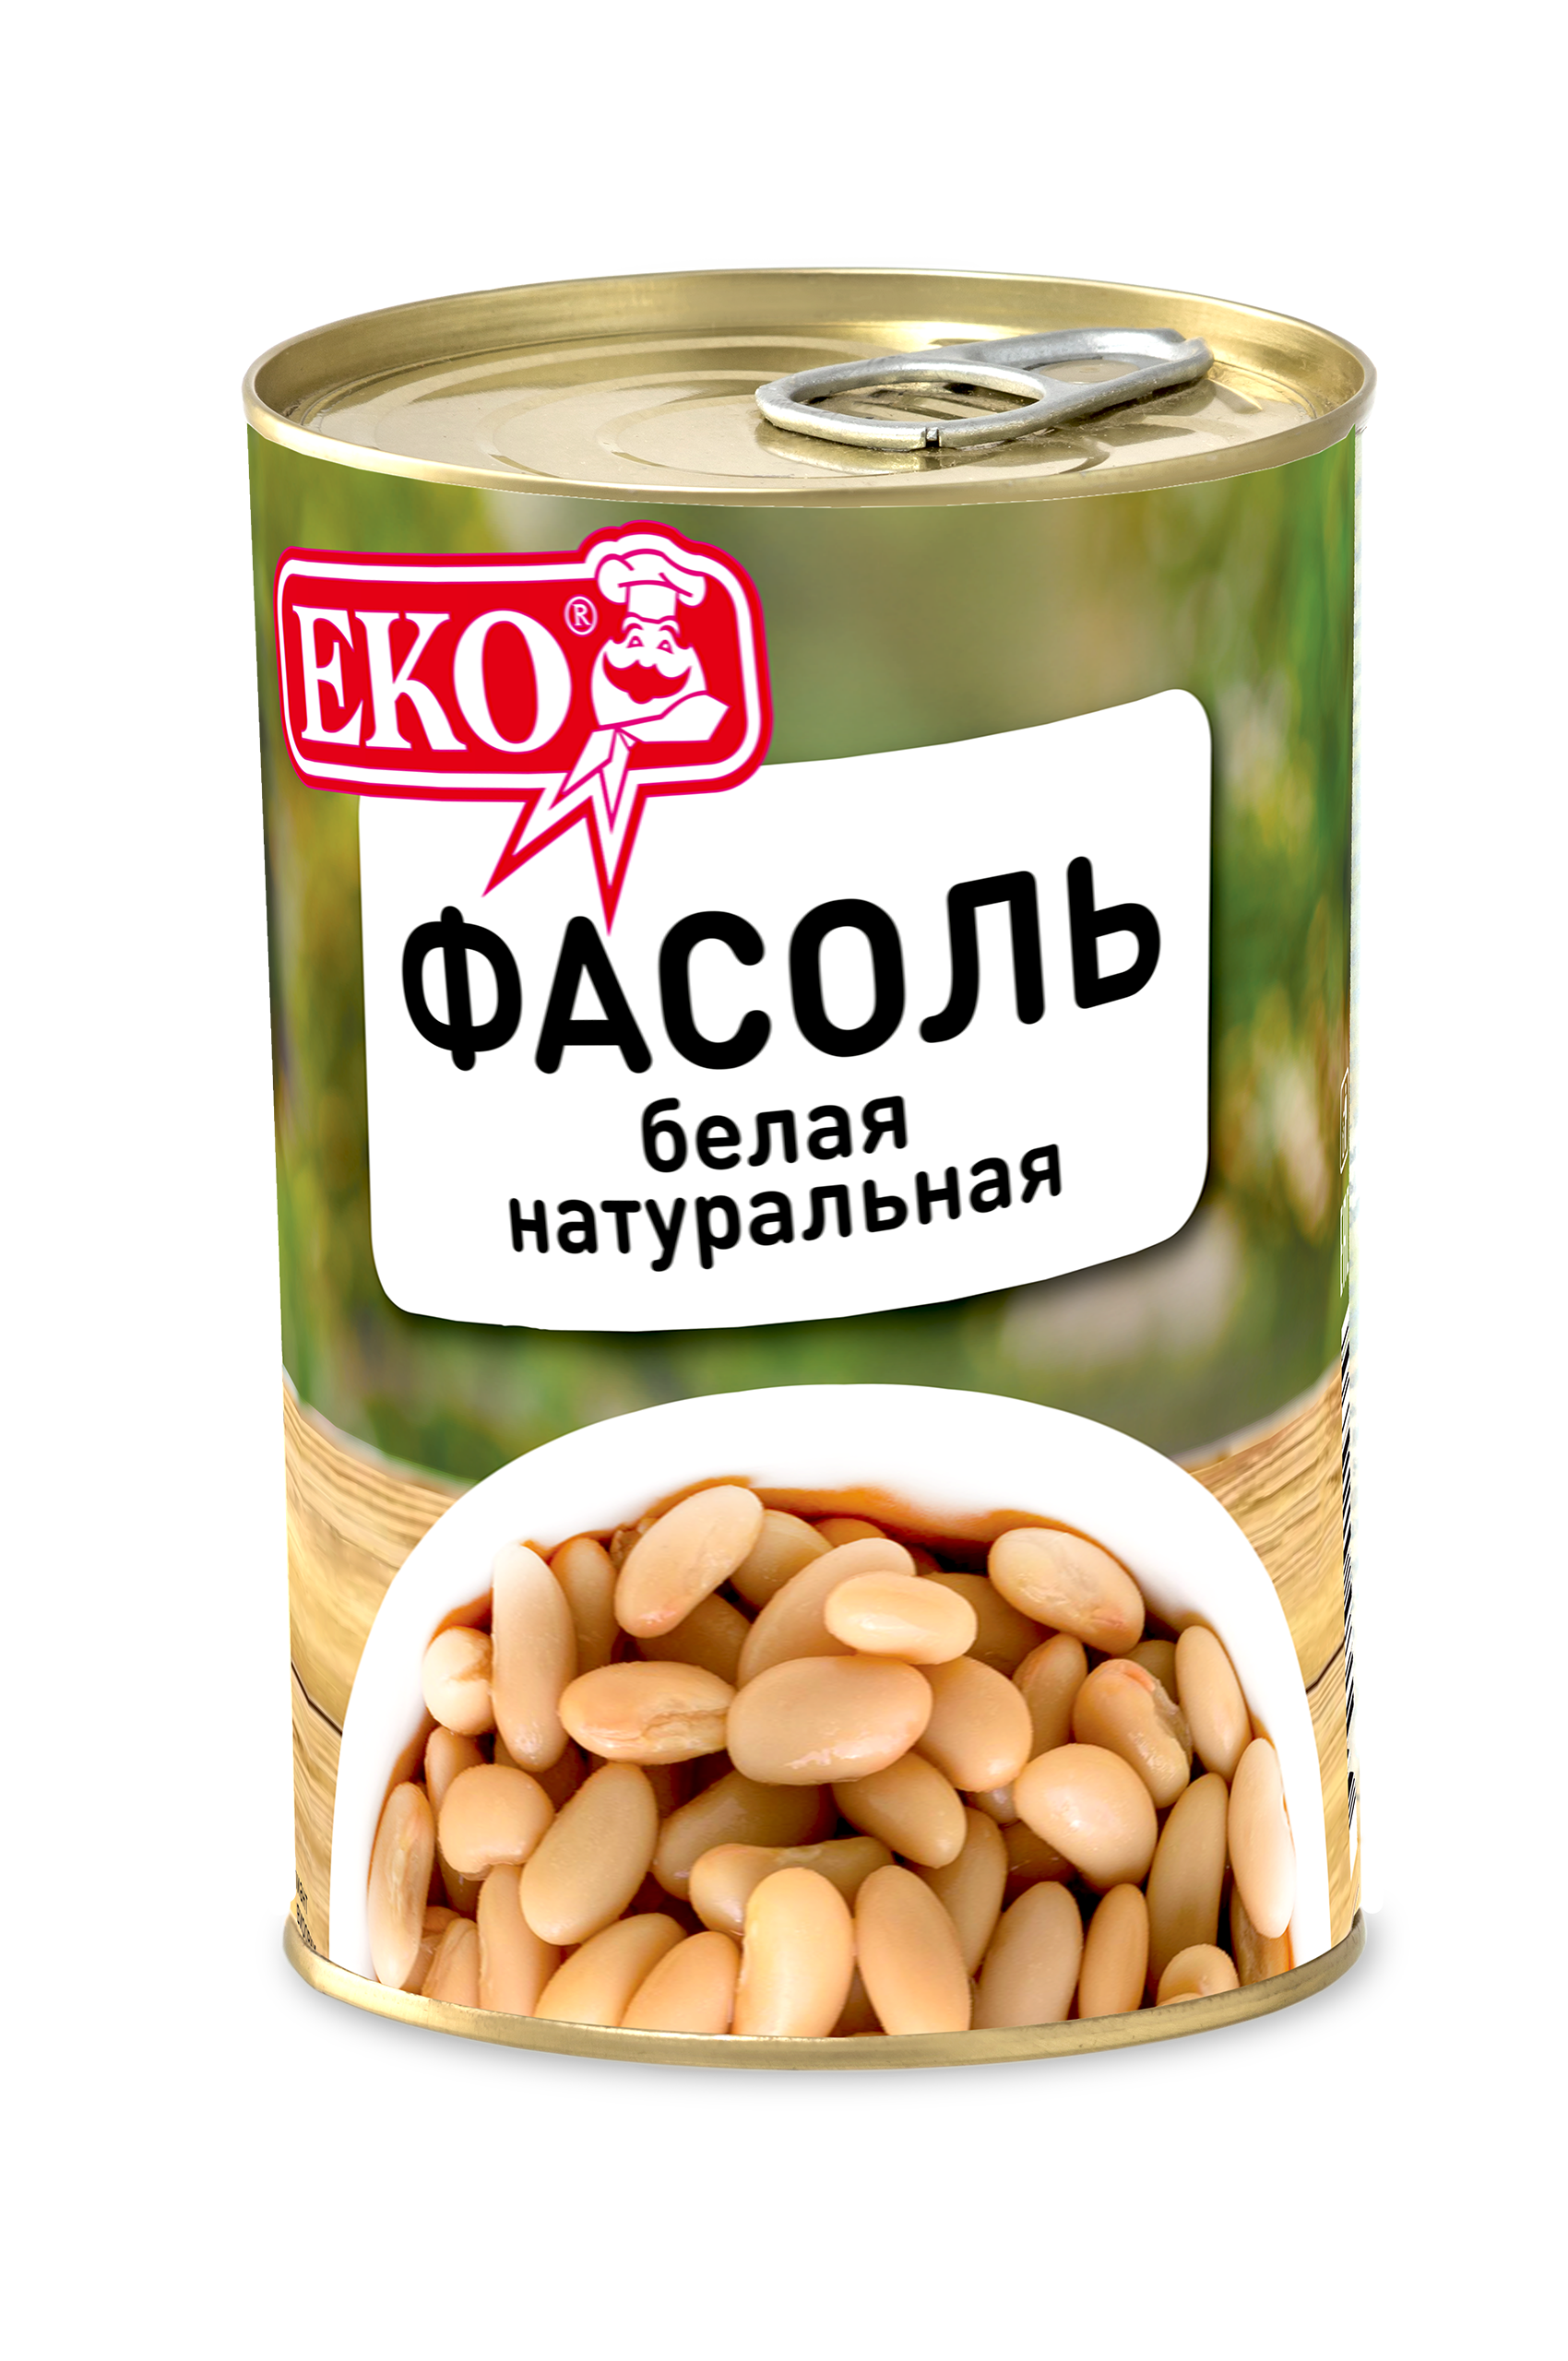 Natural white beans